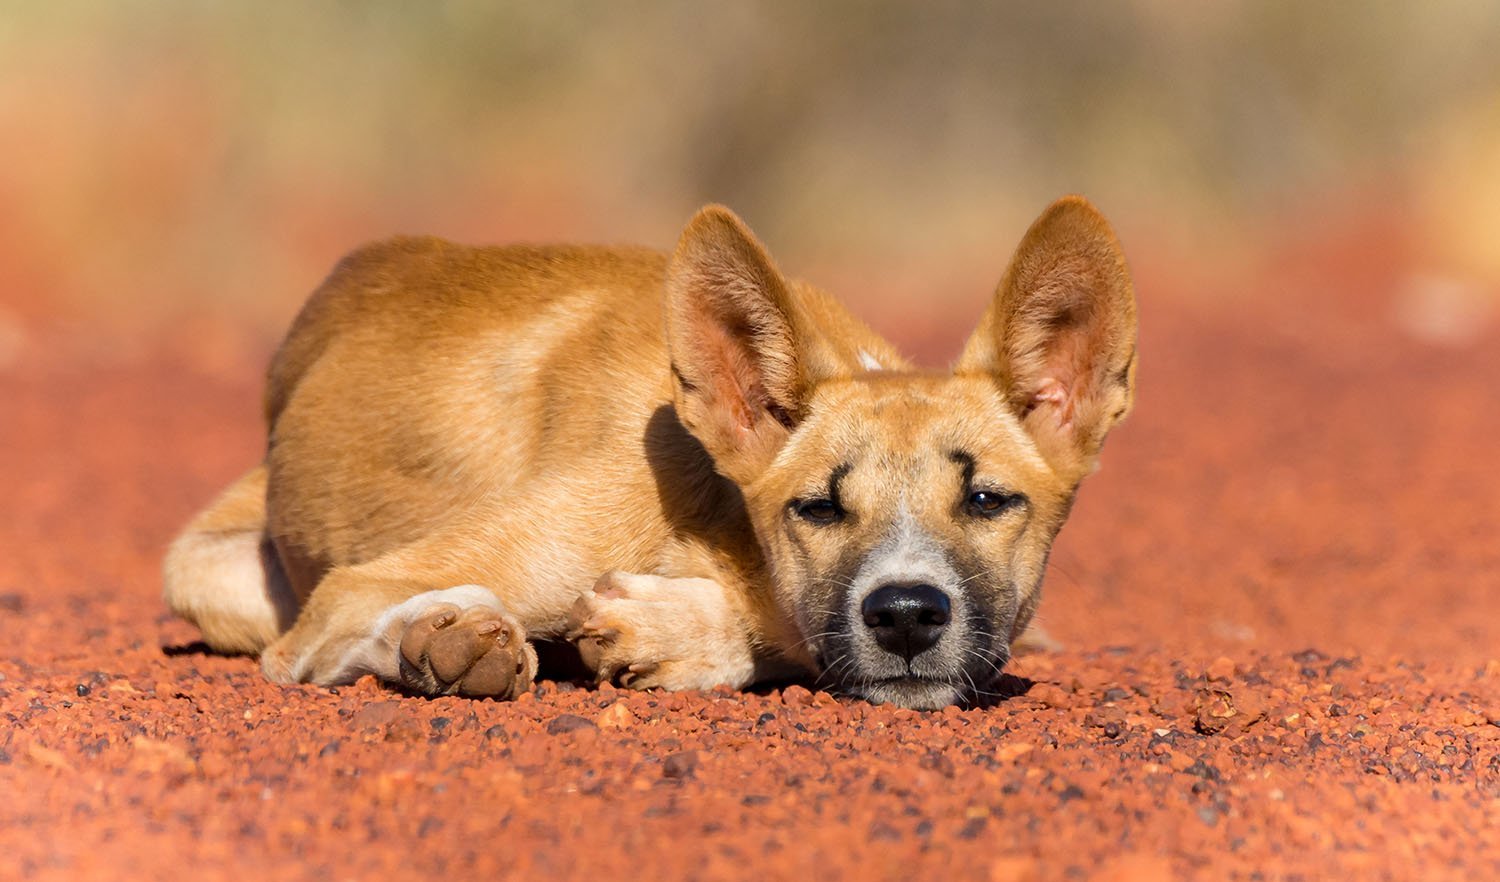 A Unique Insights into Australia`s Top Land Predator - The Dingo